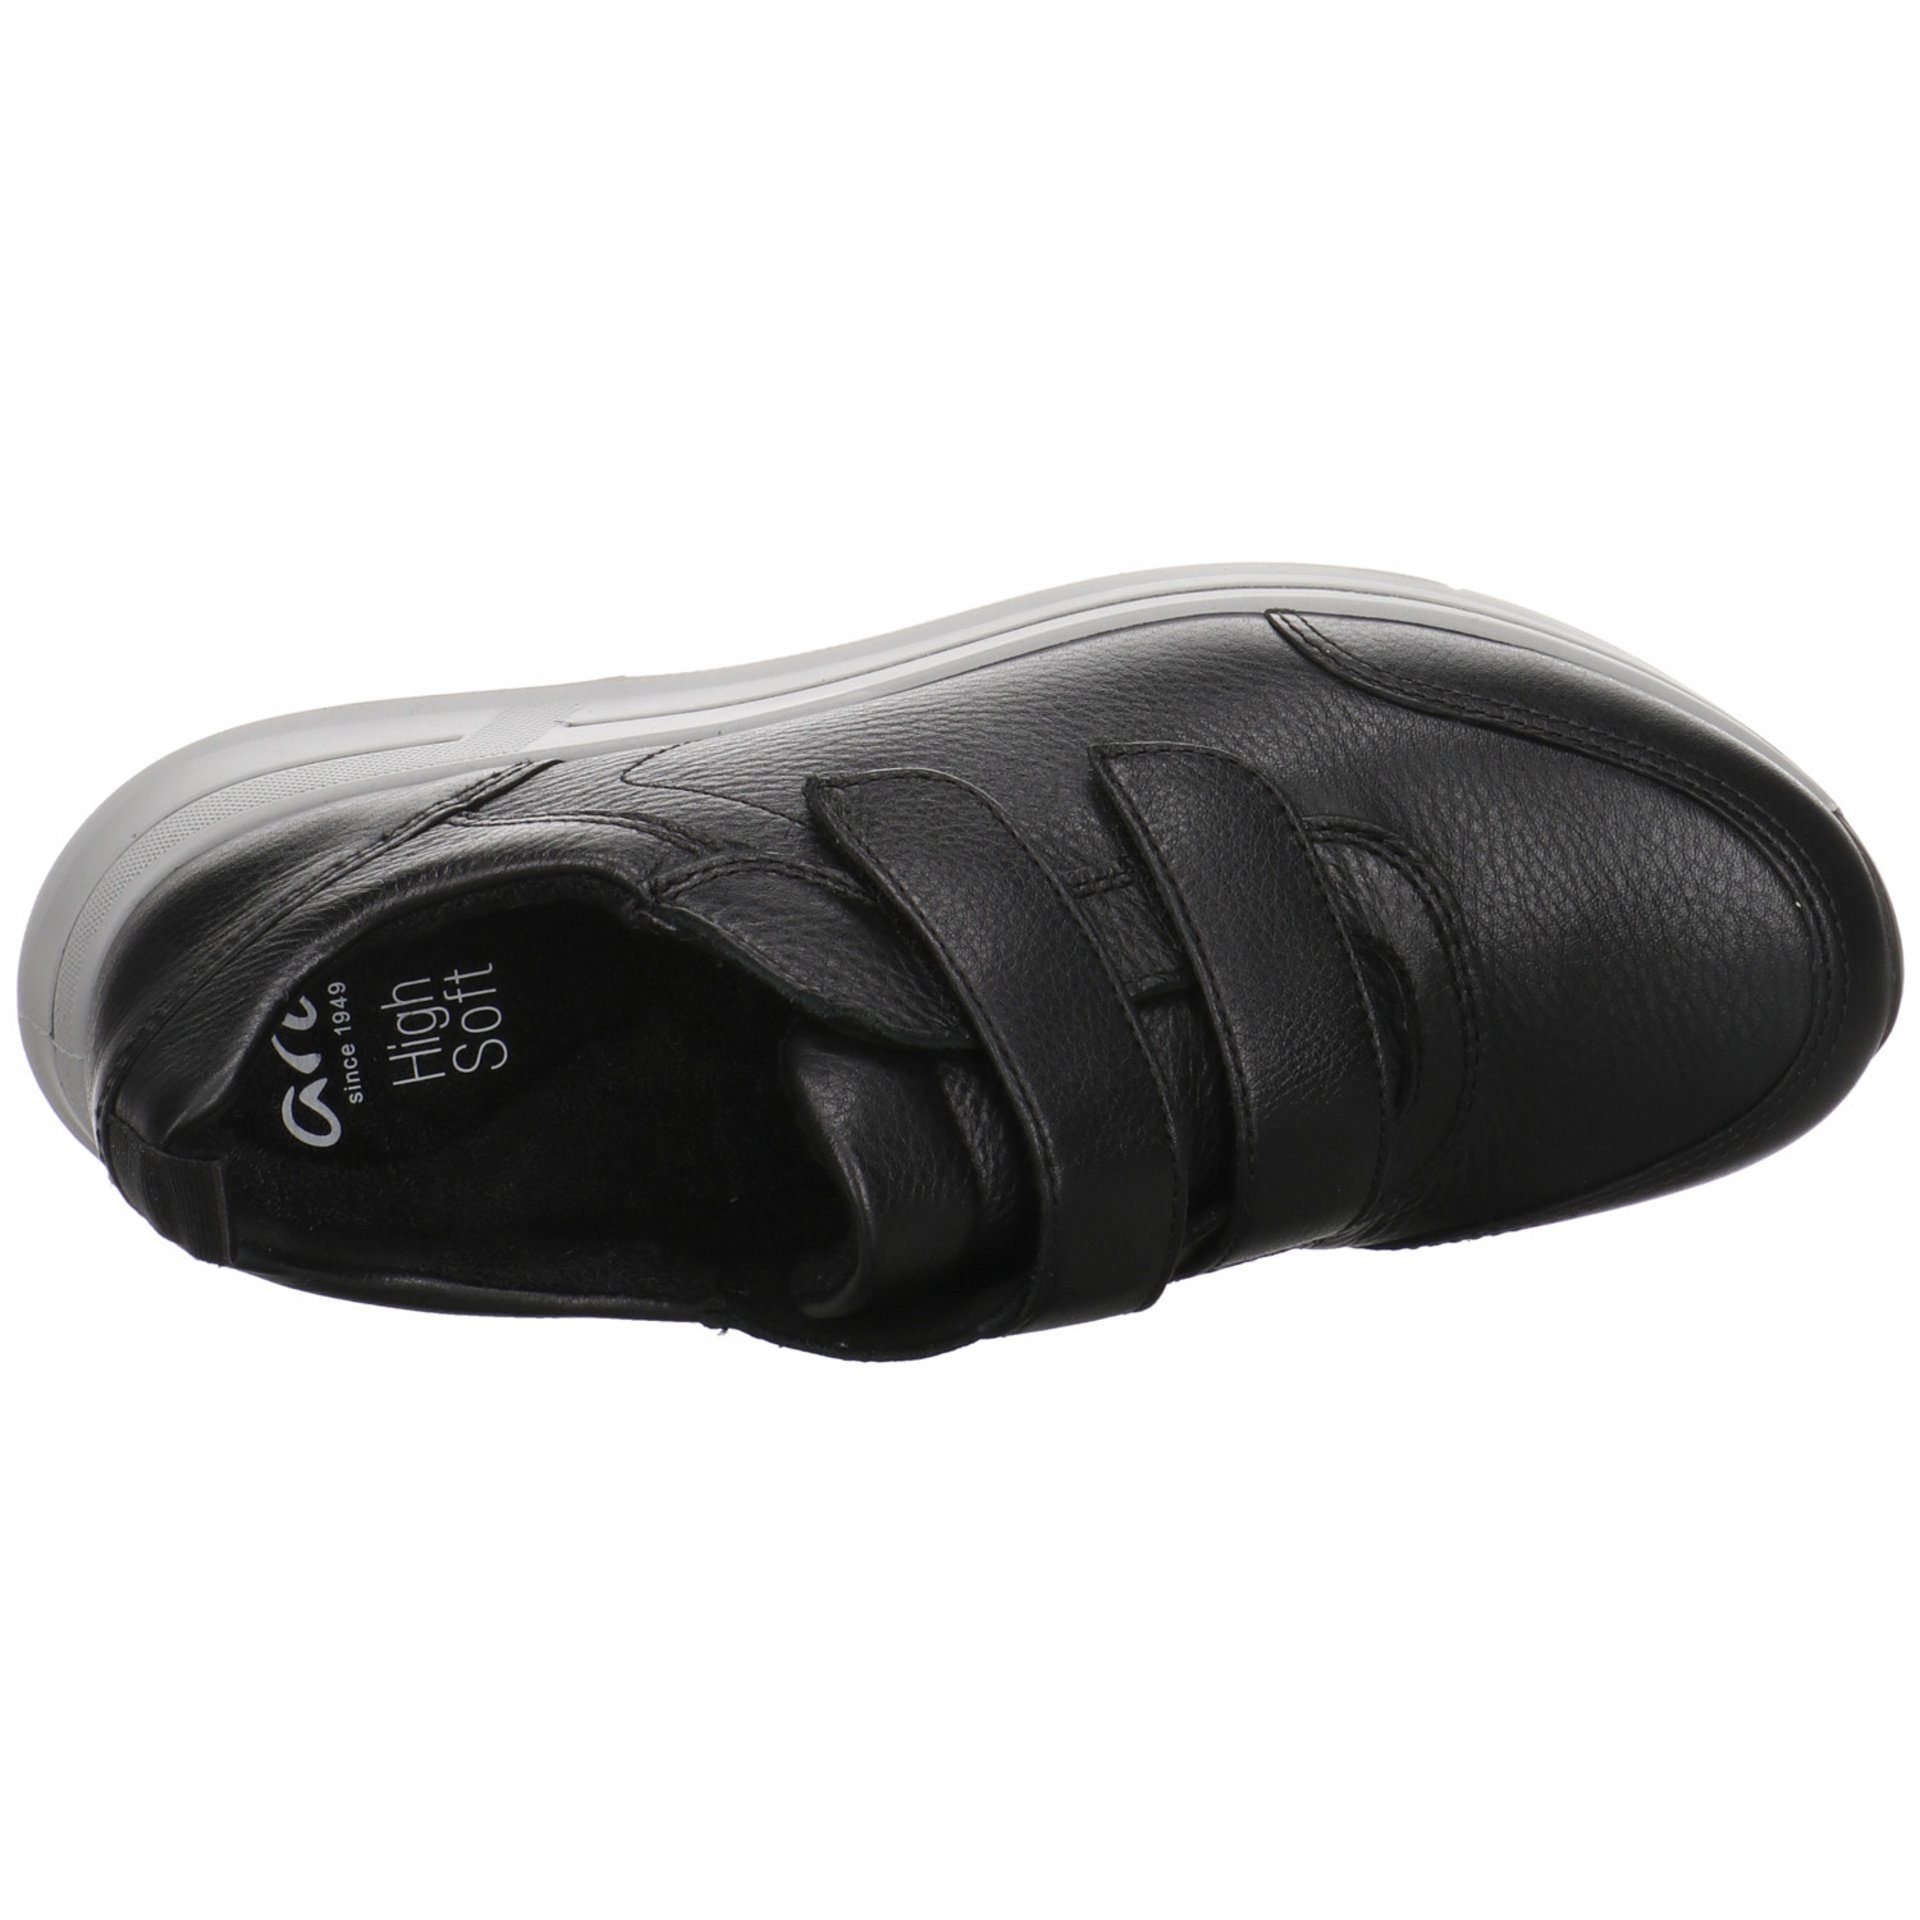 Ara Damen Slipper Schuhe 046730 Slipper schwarz Klettschuh Osaka Glattleder